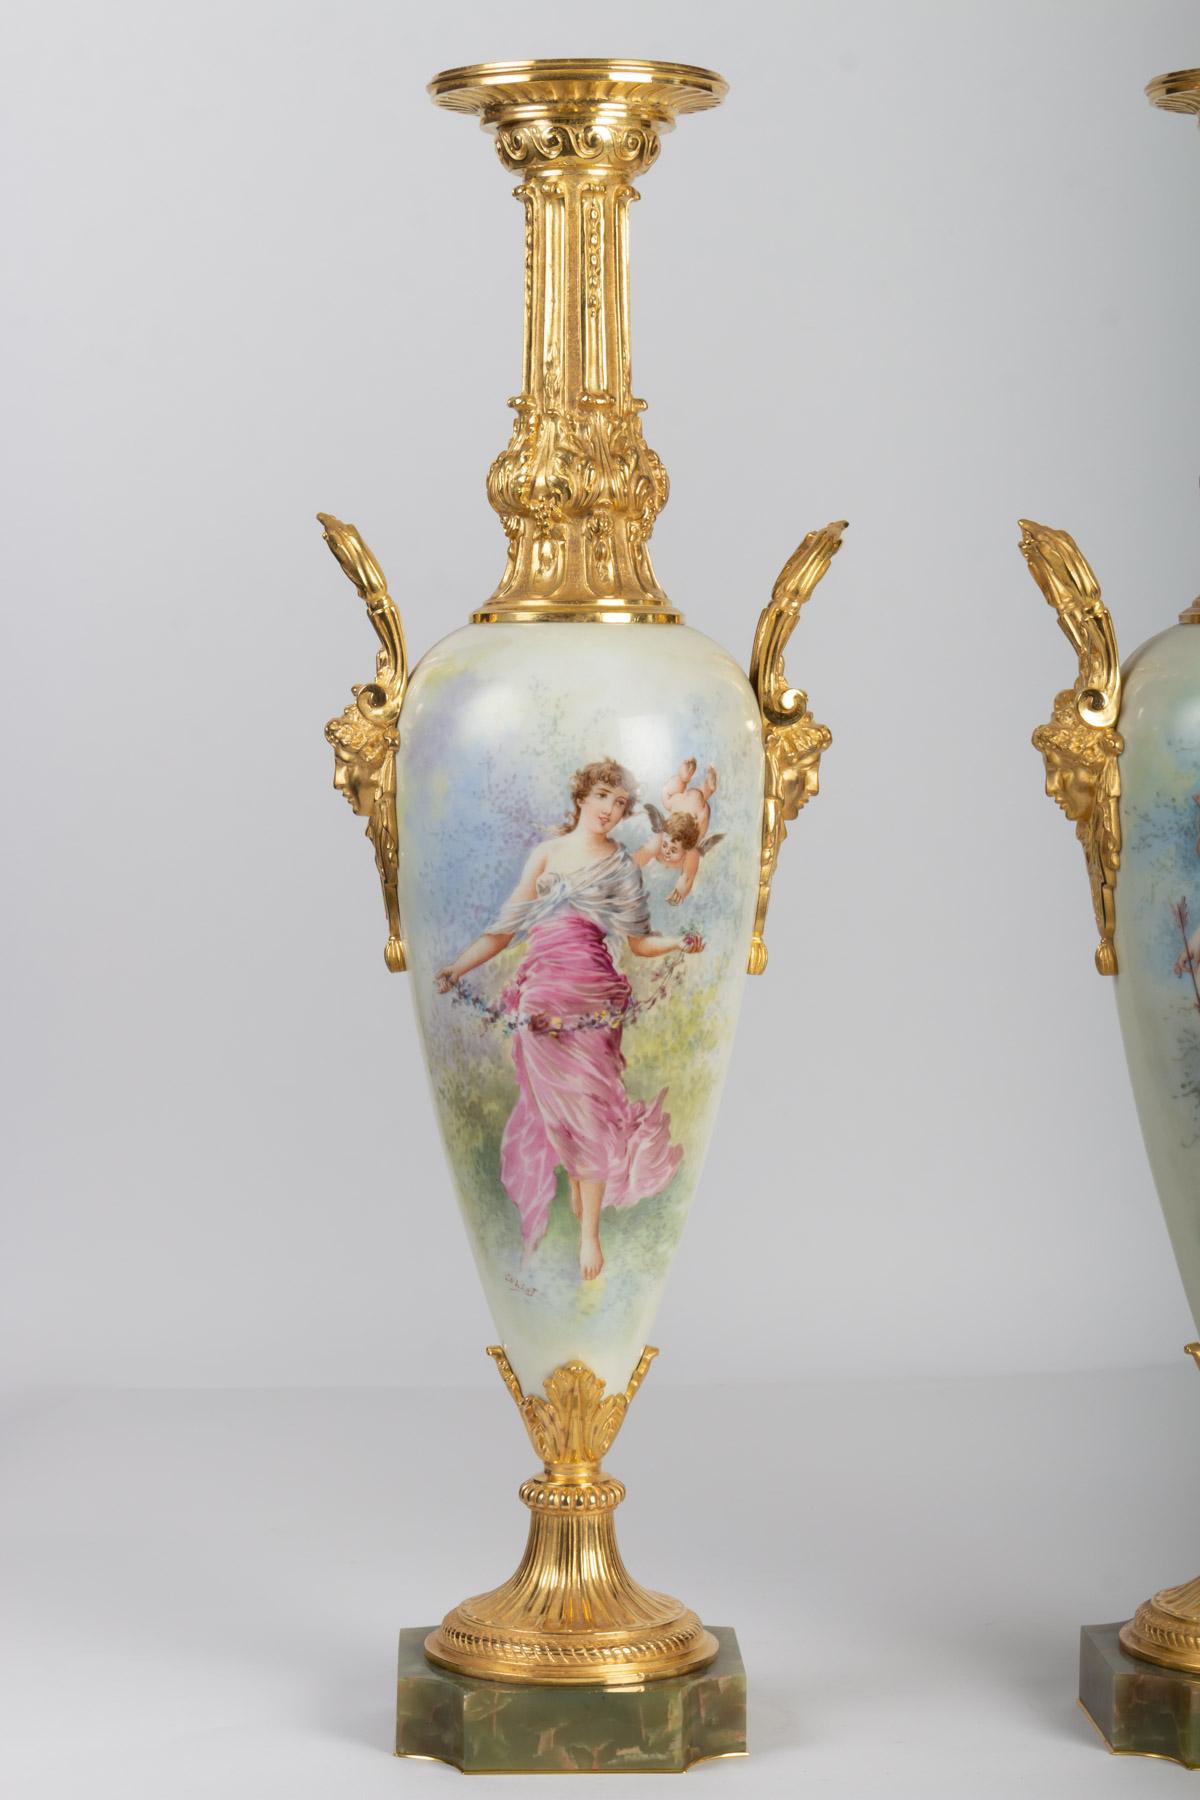 Pair of gilt bronze vases, painted porcelain and onyx, 19th century, Napoleon III period

Measures: H 63cm, W 23cm, D 14cm.